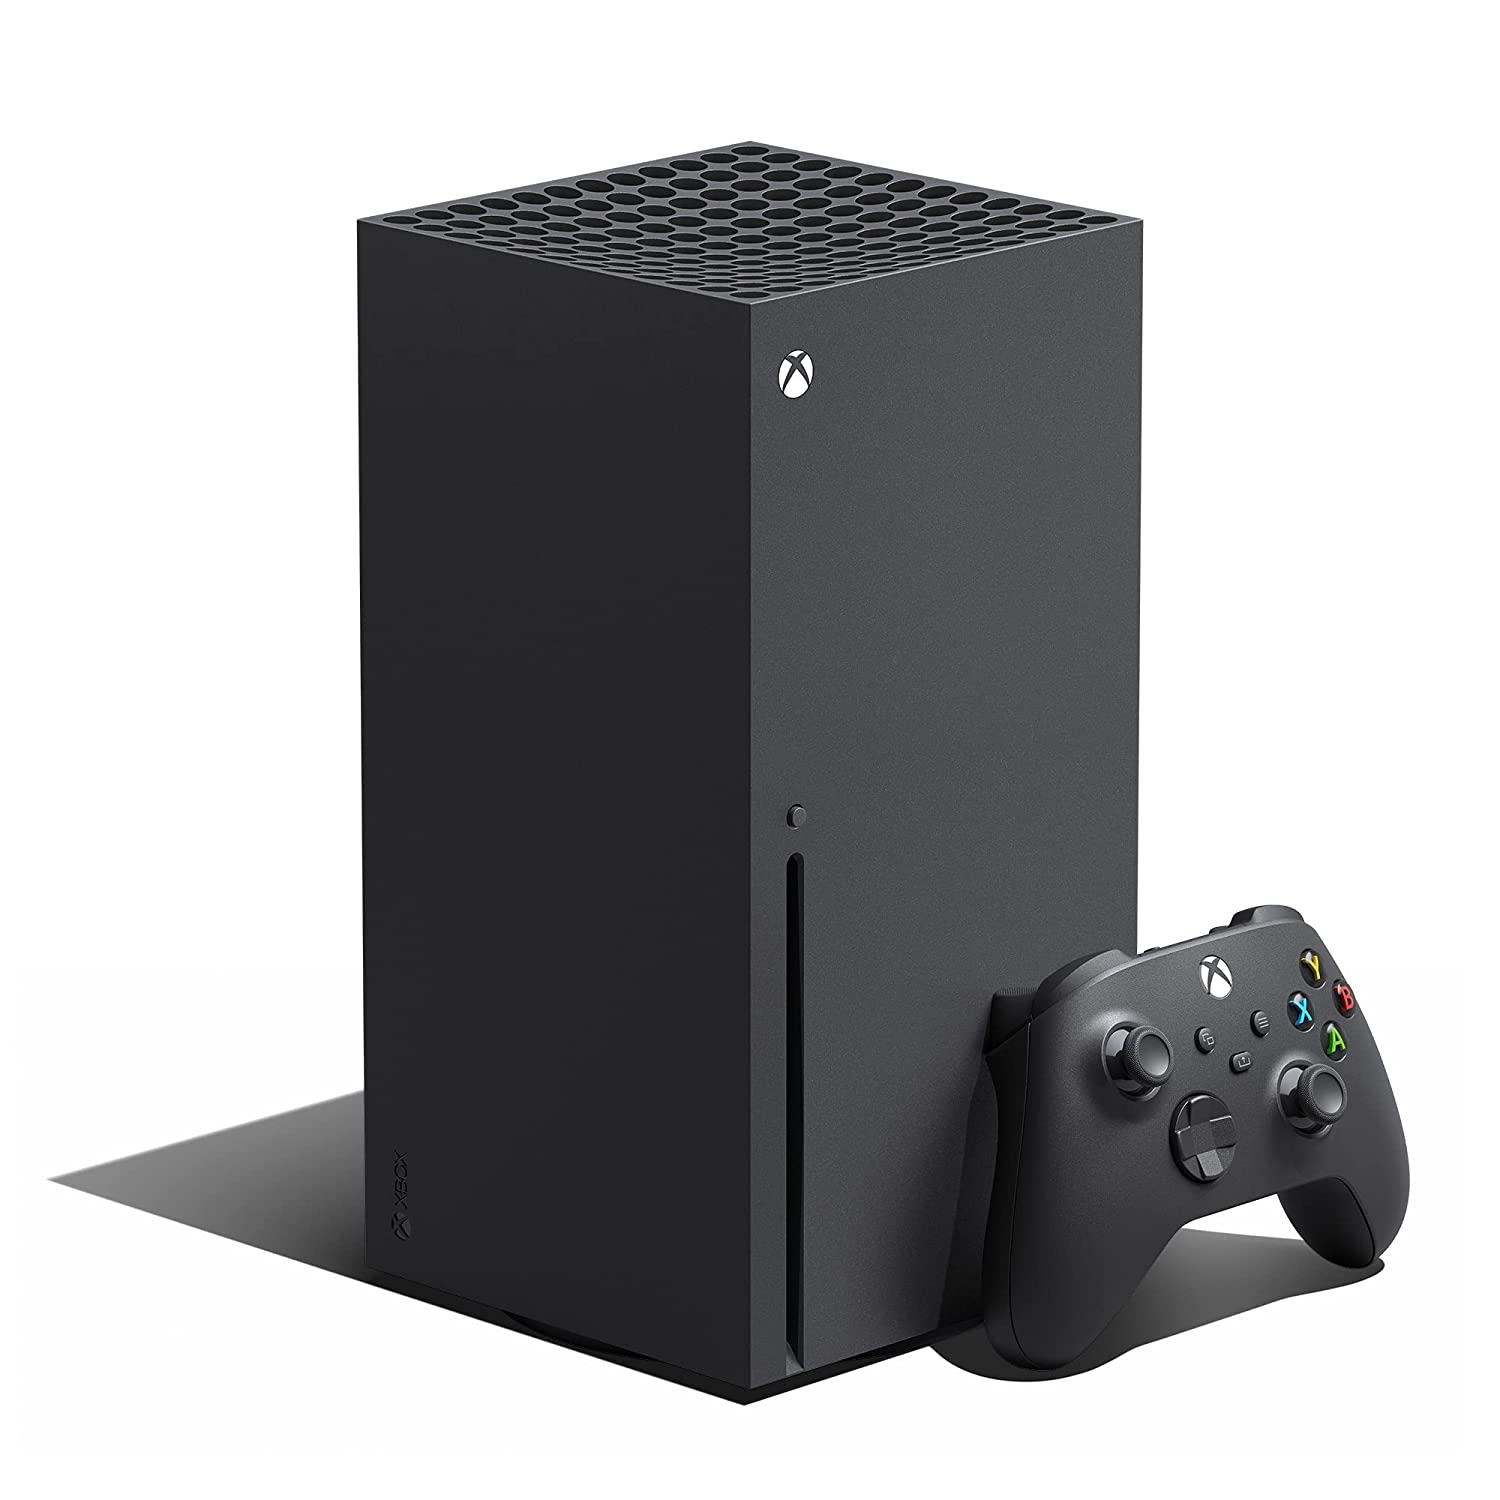 Microsoft Xbox Series X - image 1 of 3